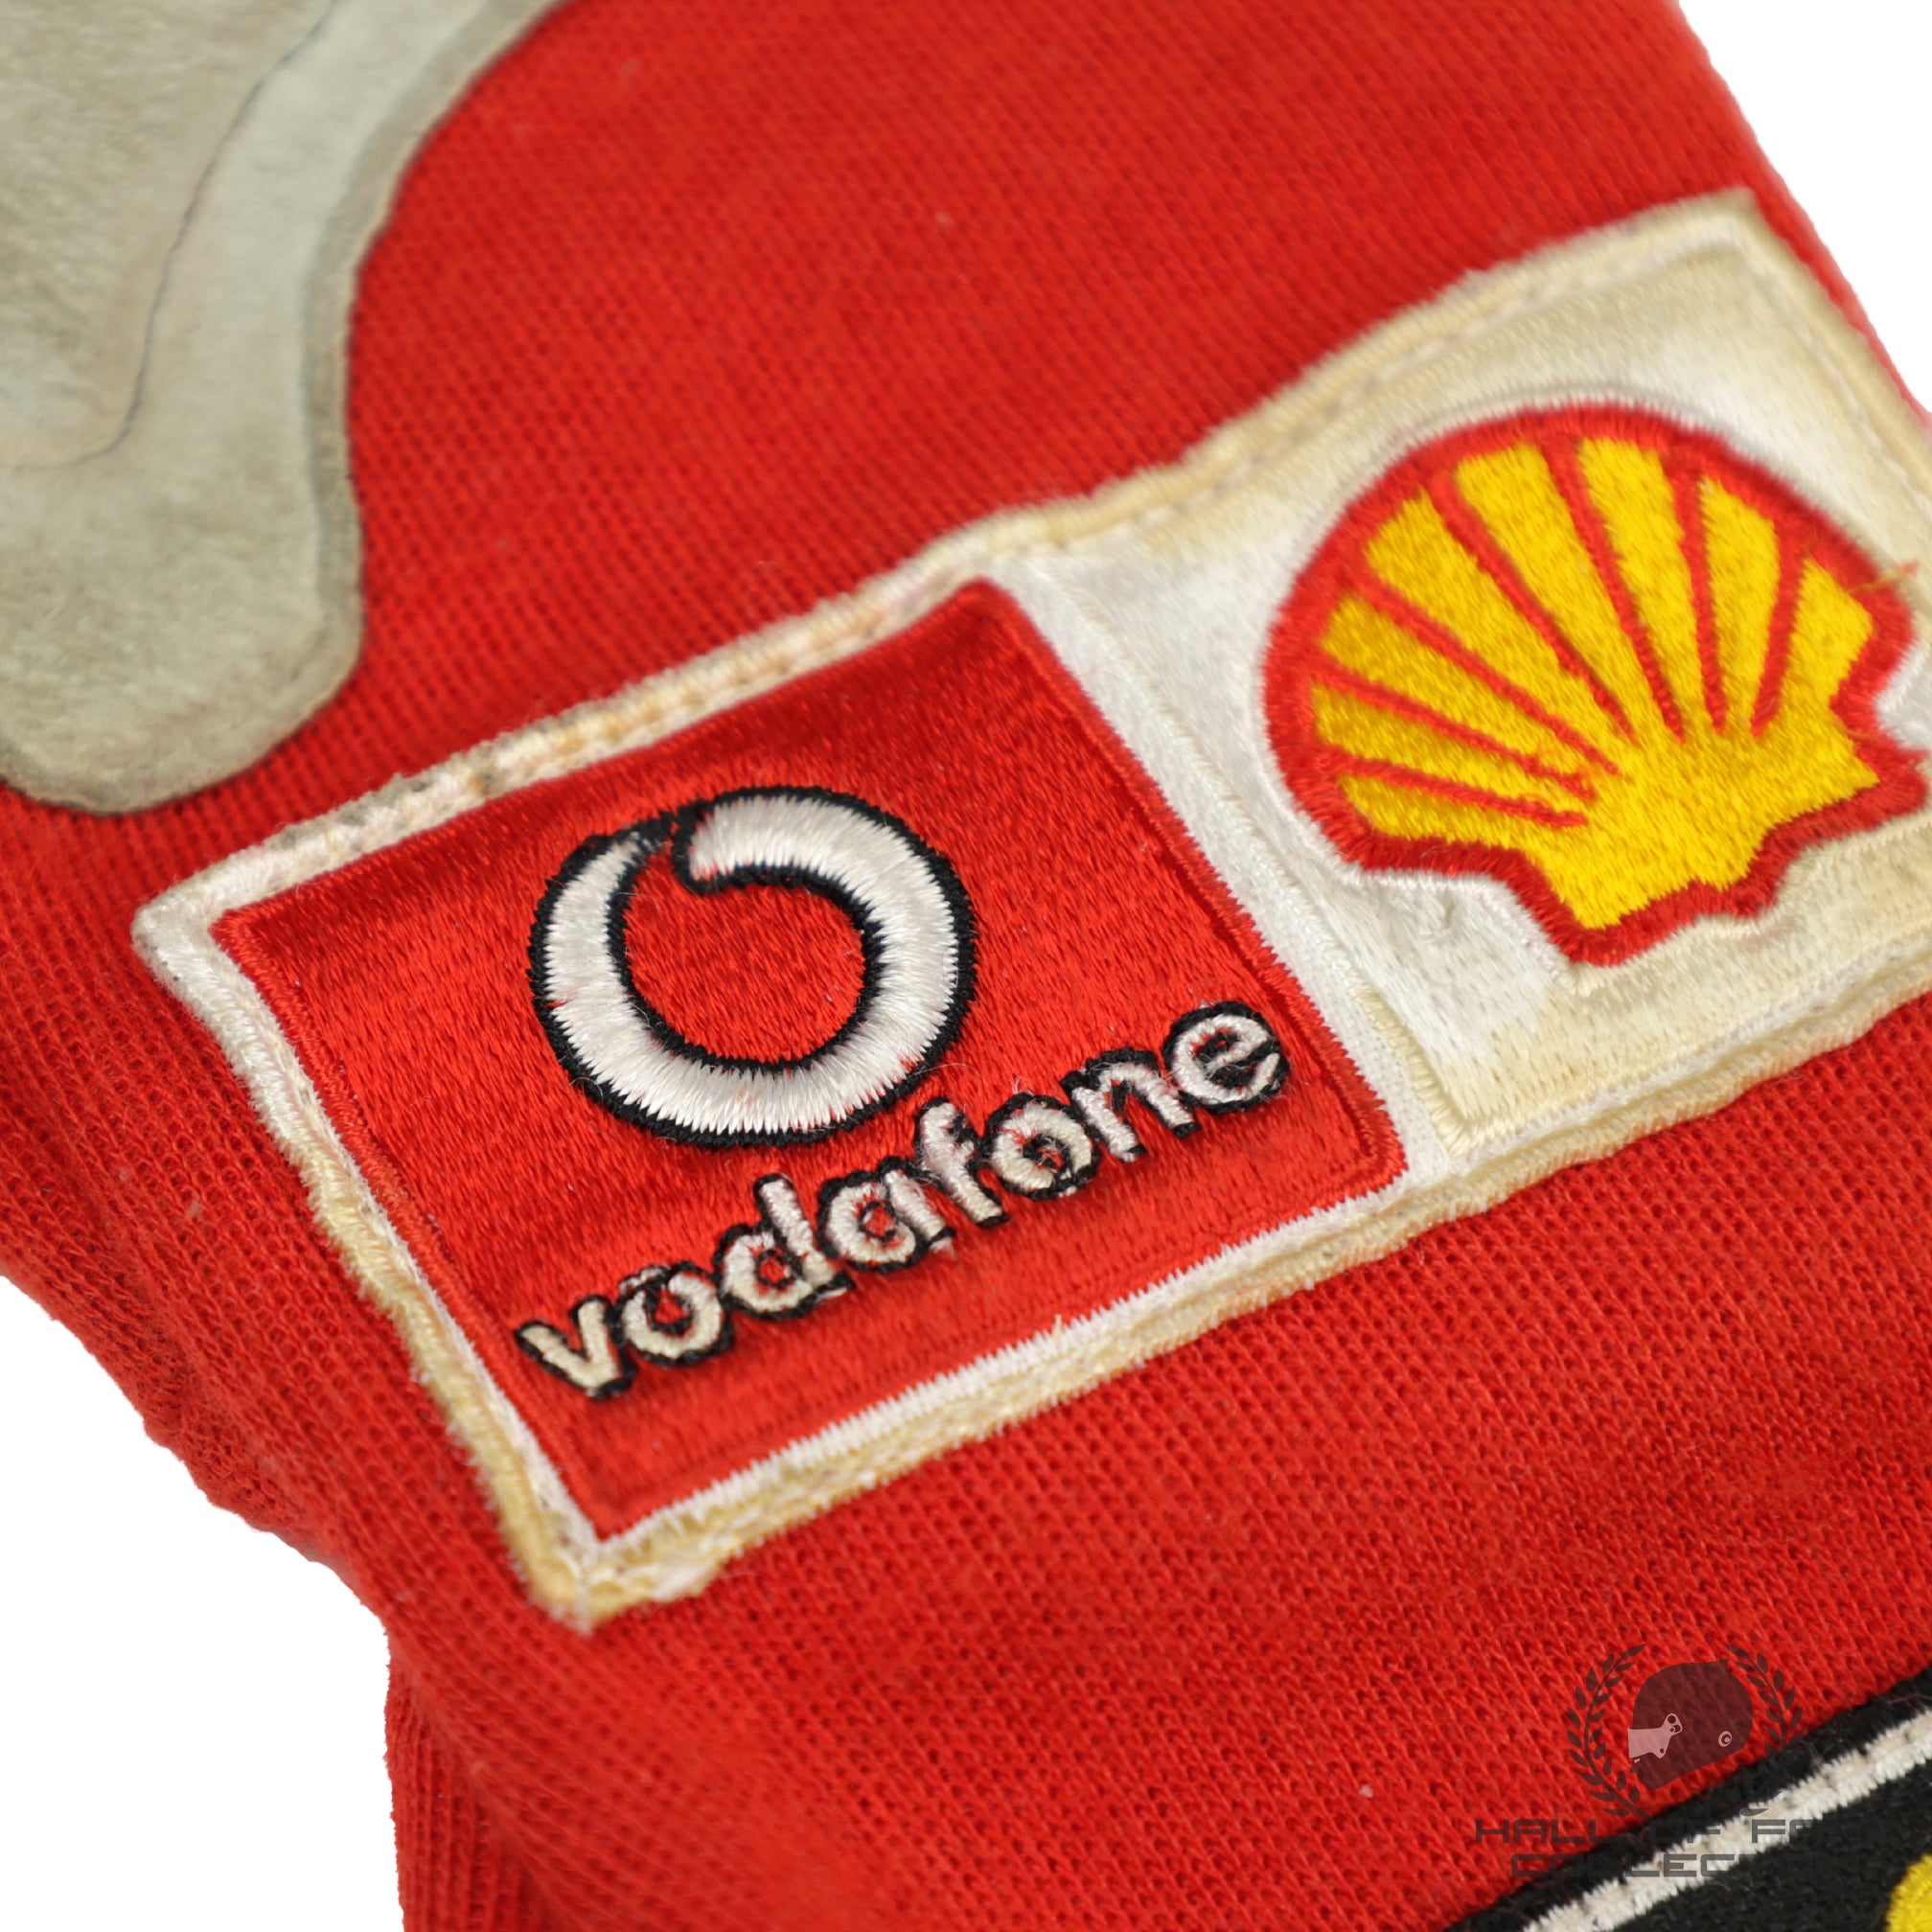 2005 Michael Schumacher Signed Race Used Scuderia Ferrari F1 Gloves